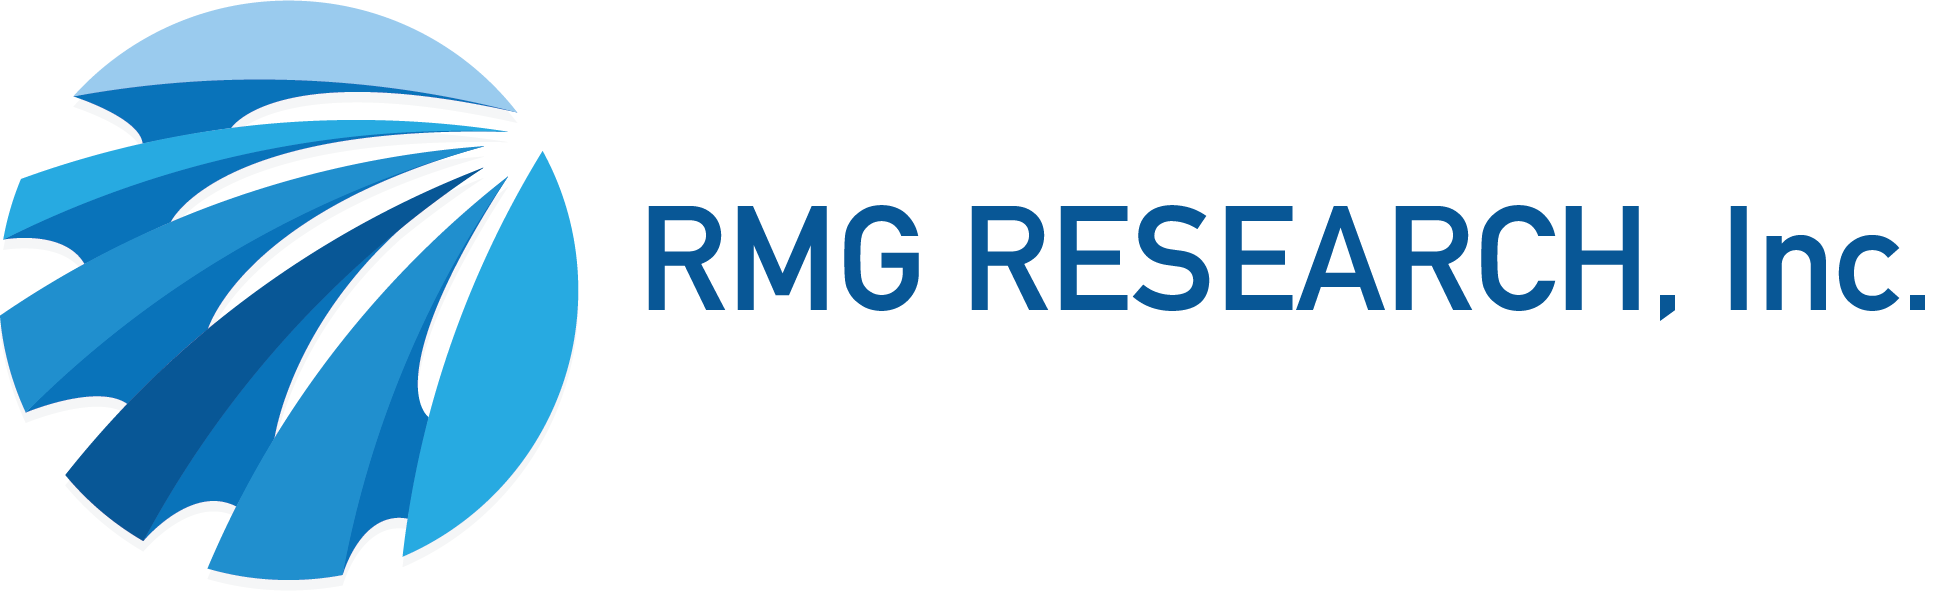 RMG Research